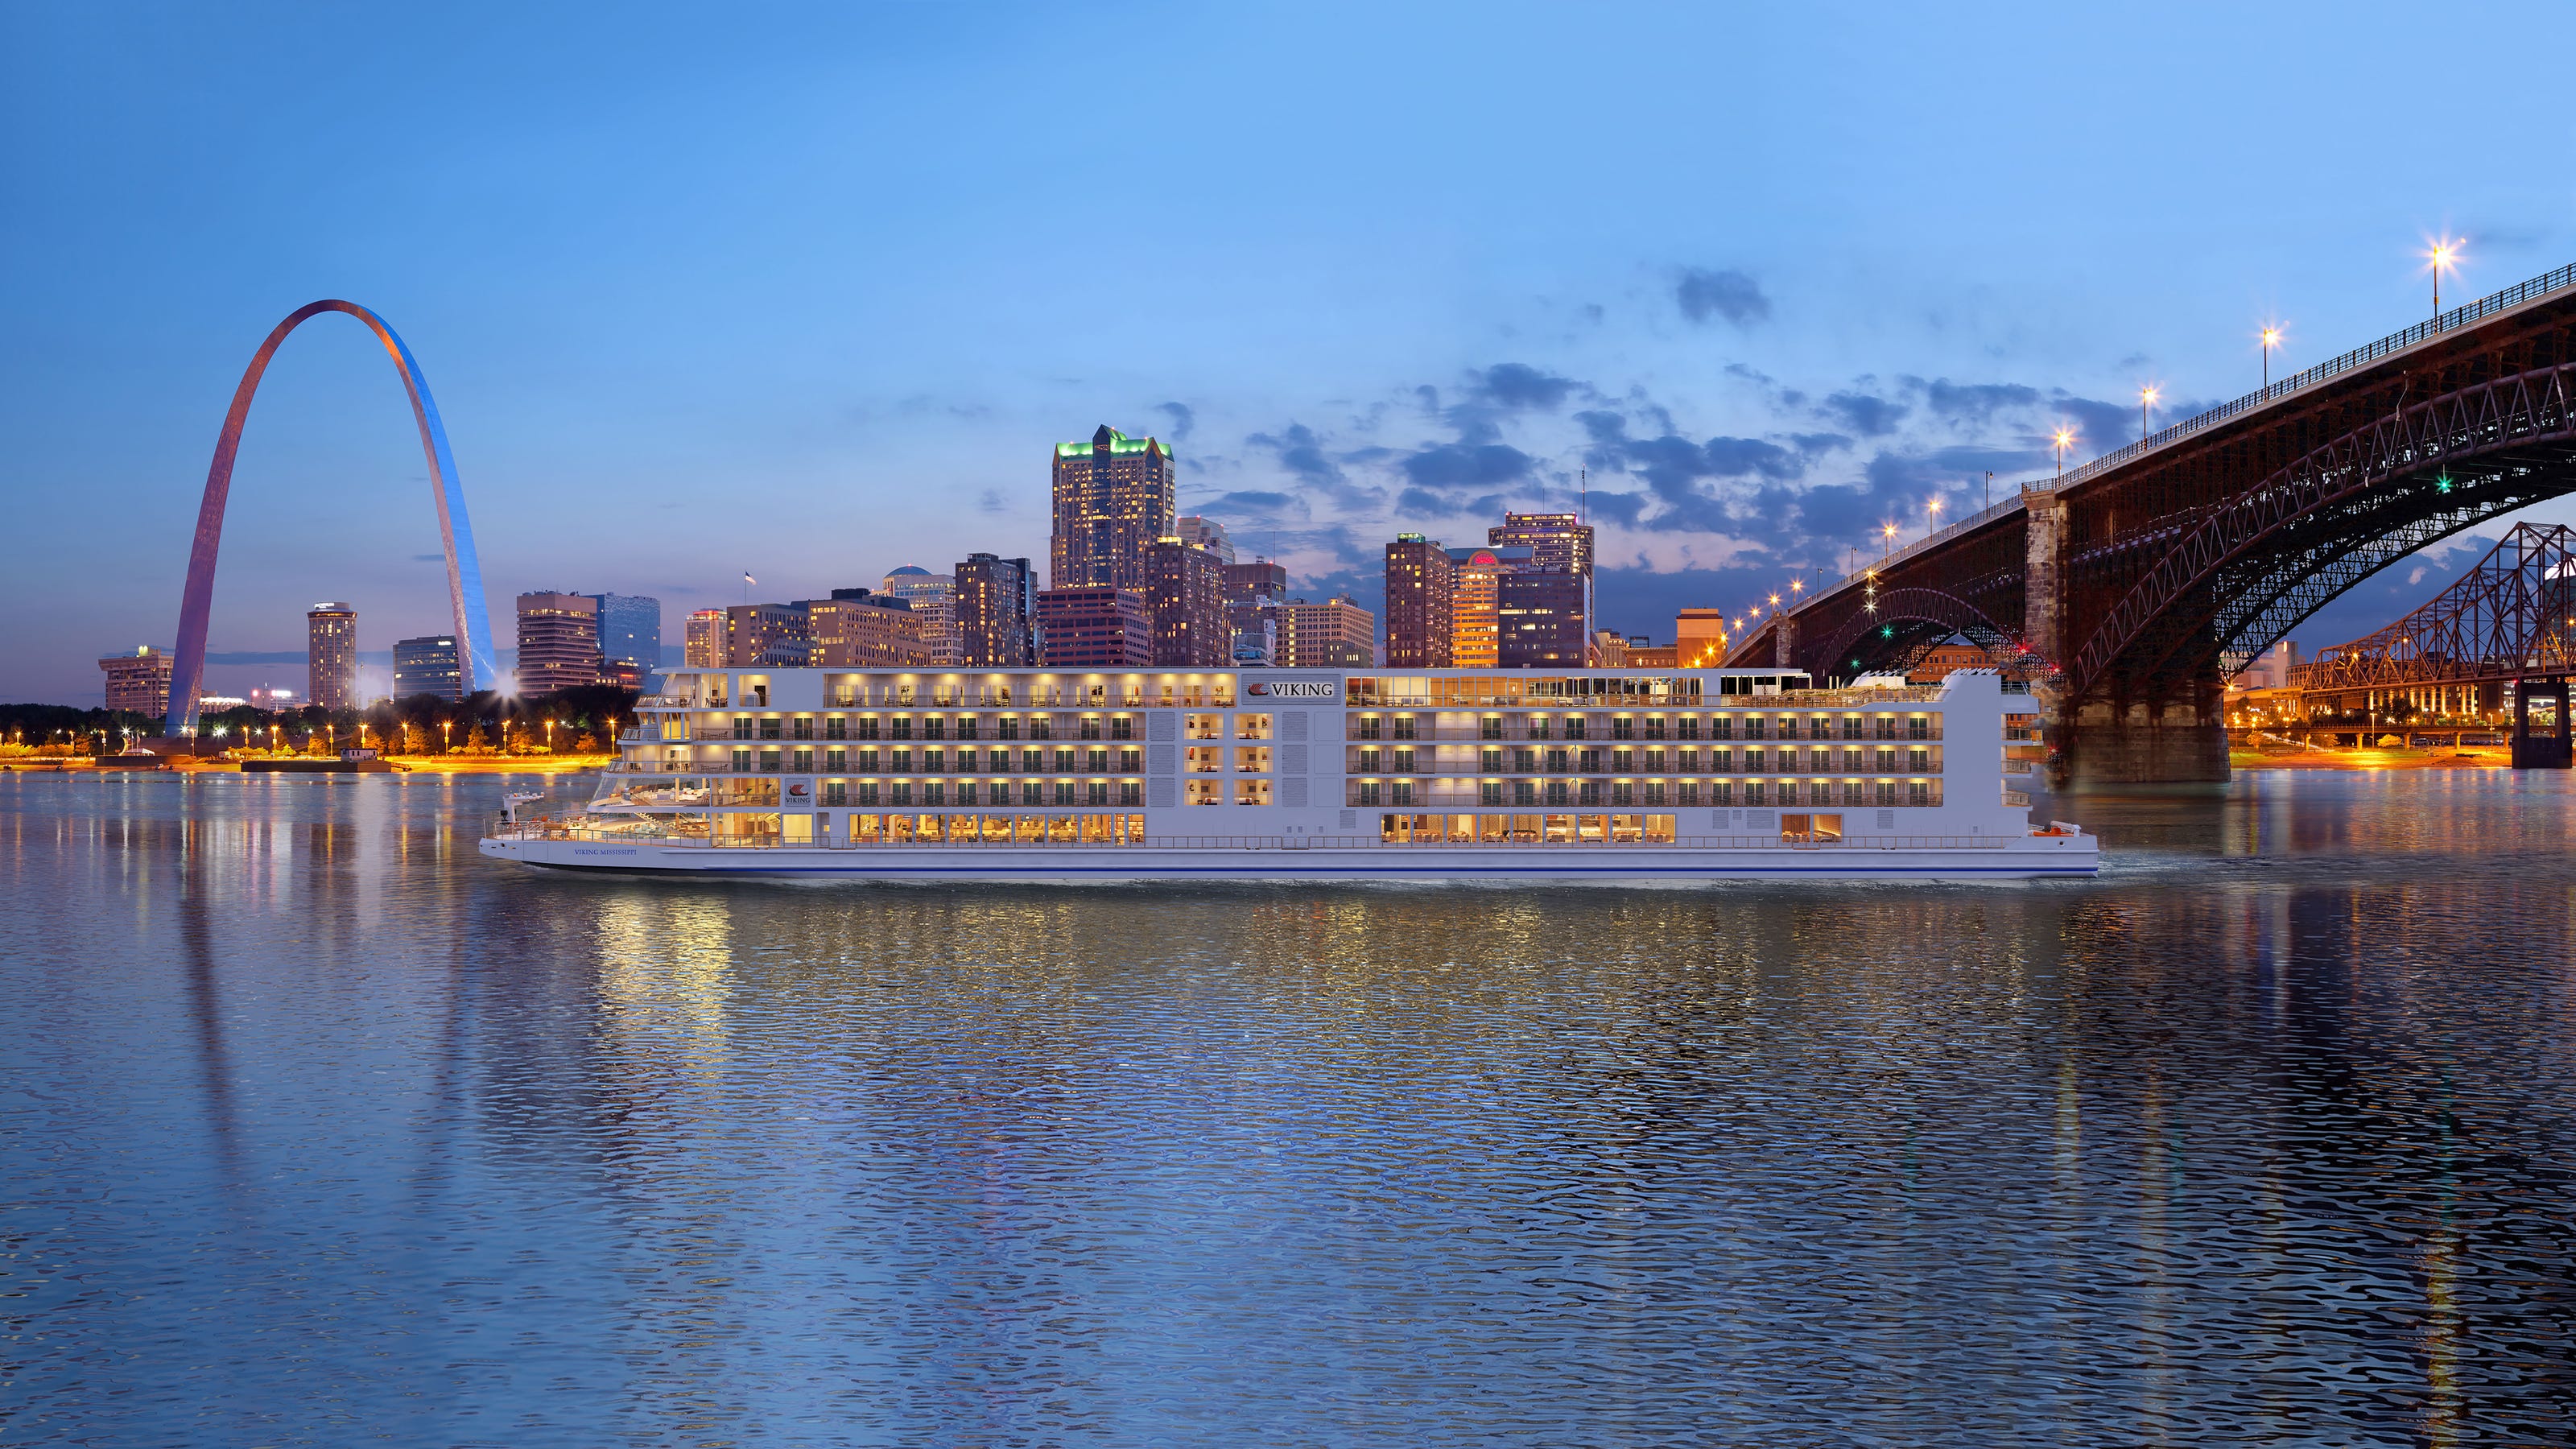 viking mississippi river cruise 2022